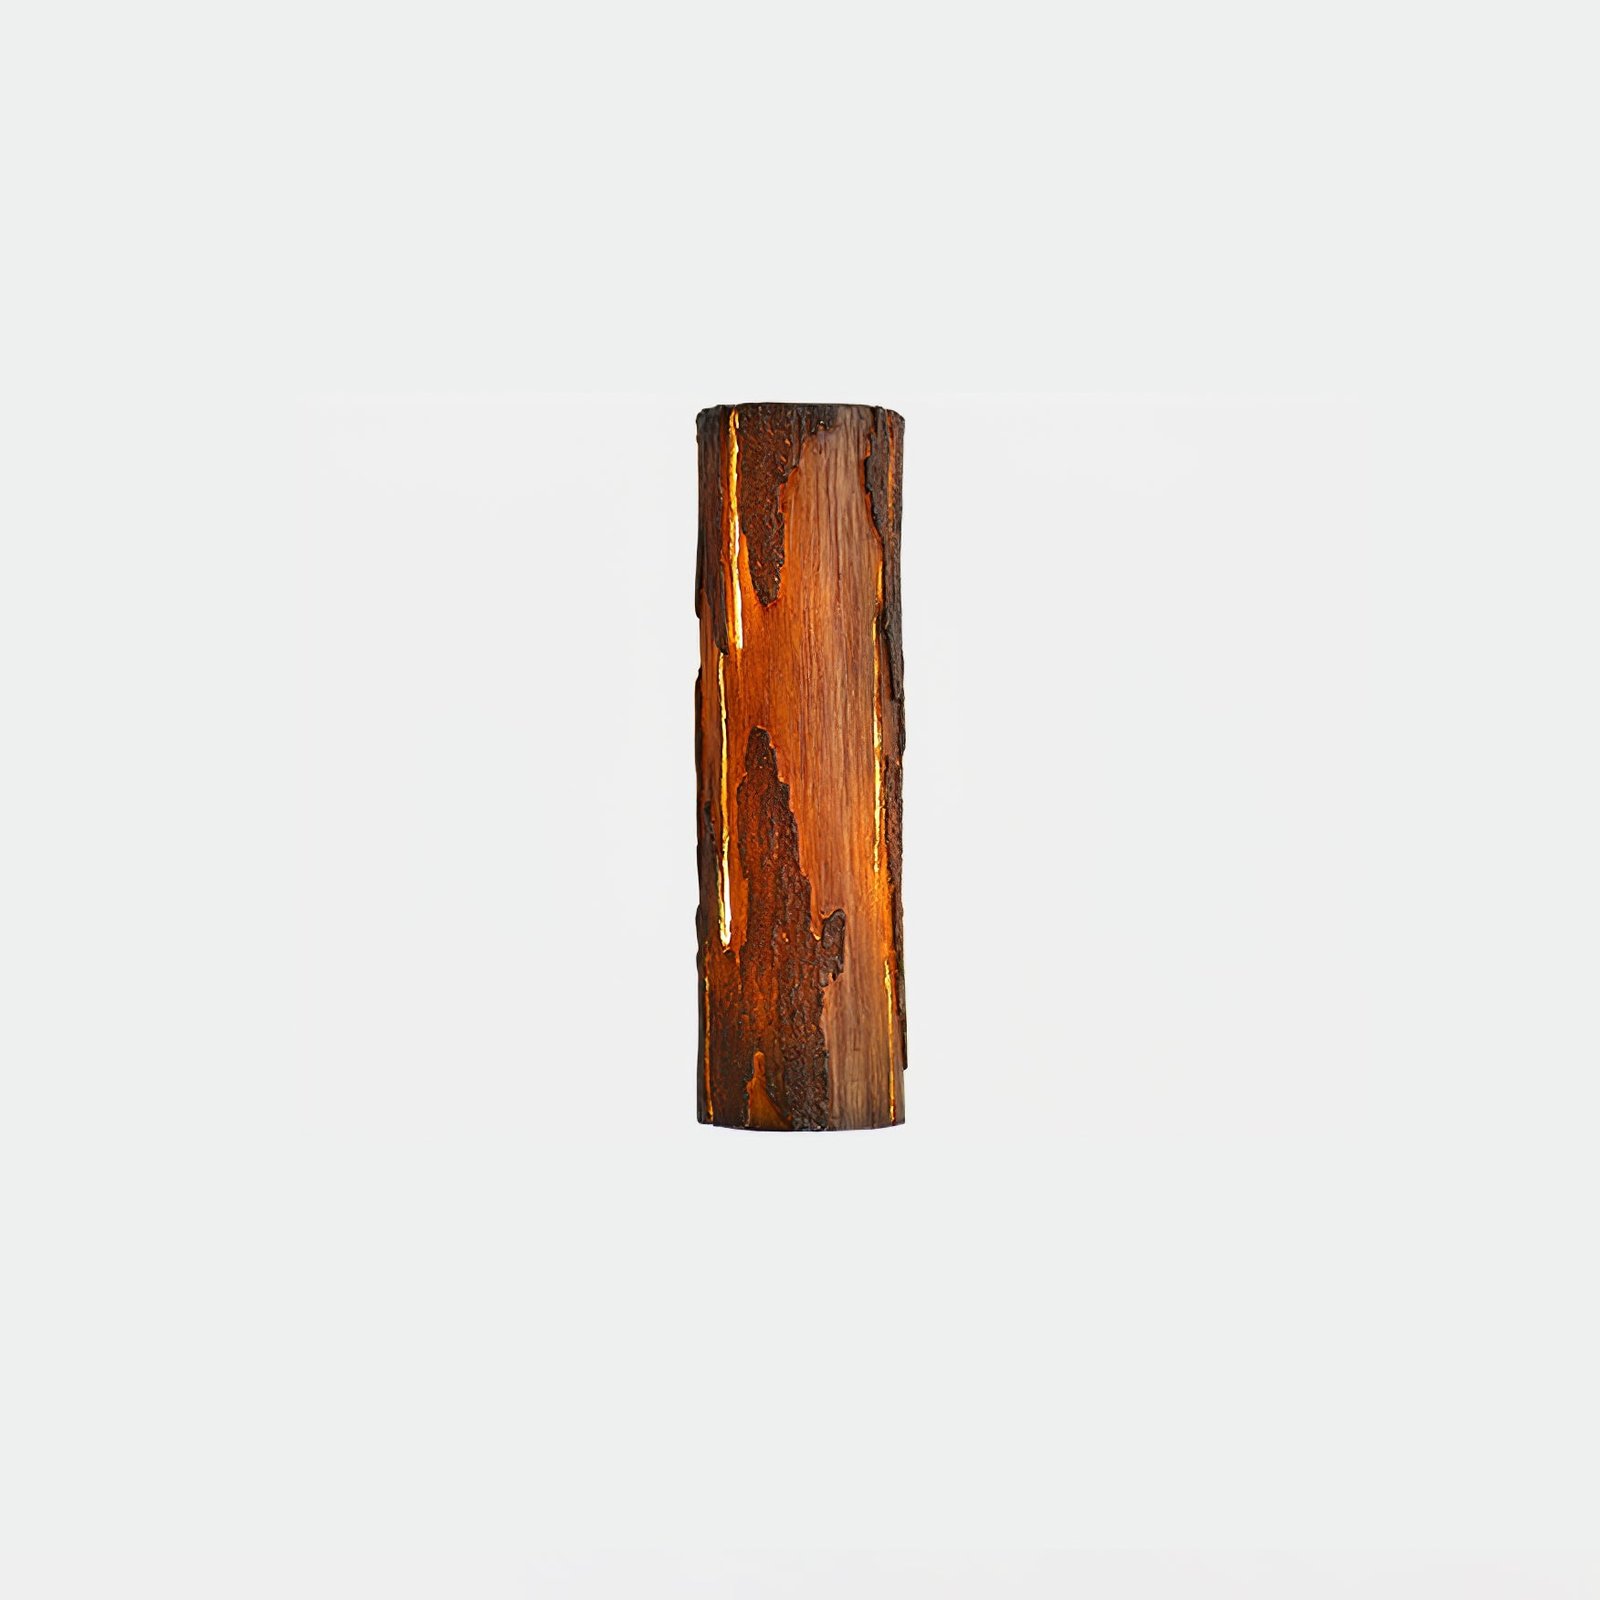 "Bark Wall Light Model B - Size: 4.7-inch Diameter x 15-inch Height (12cm x 38cm)"